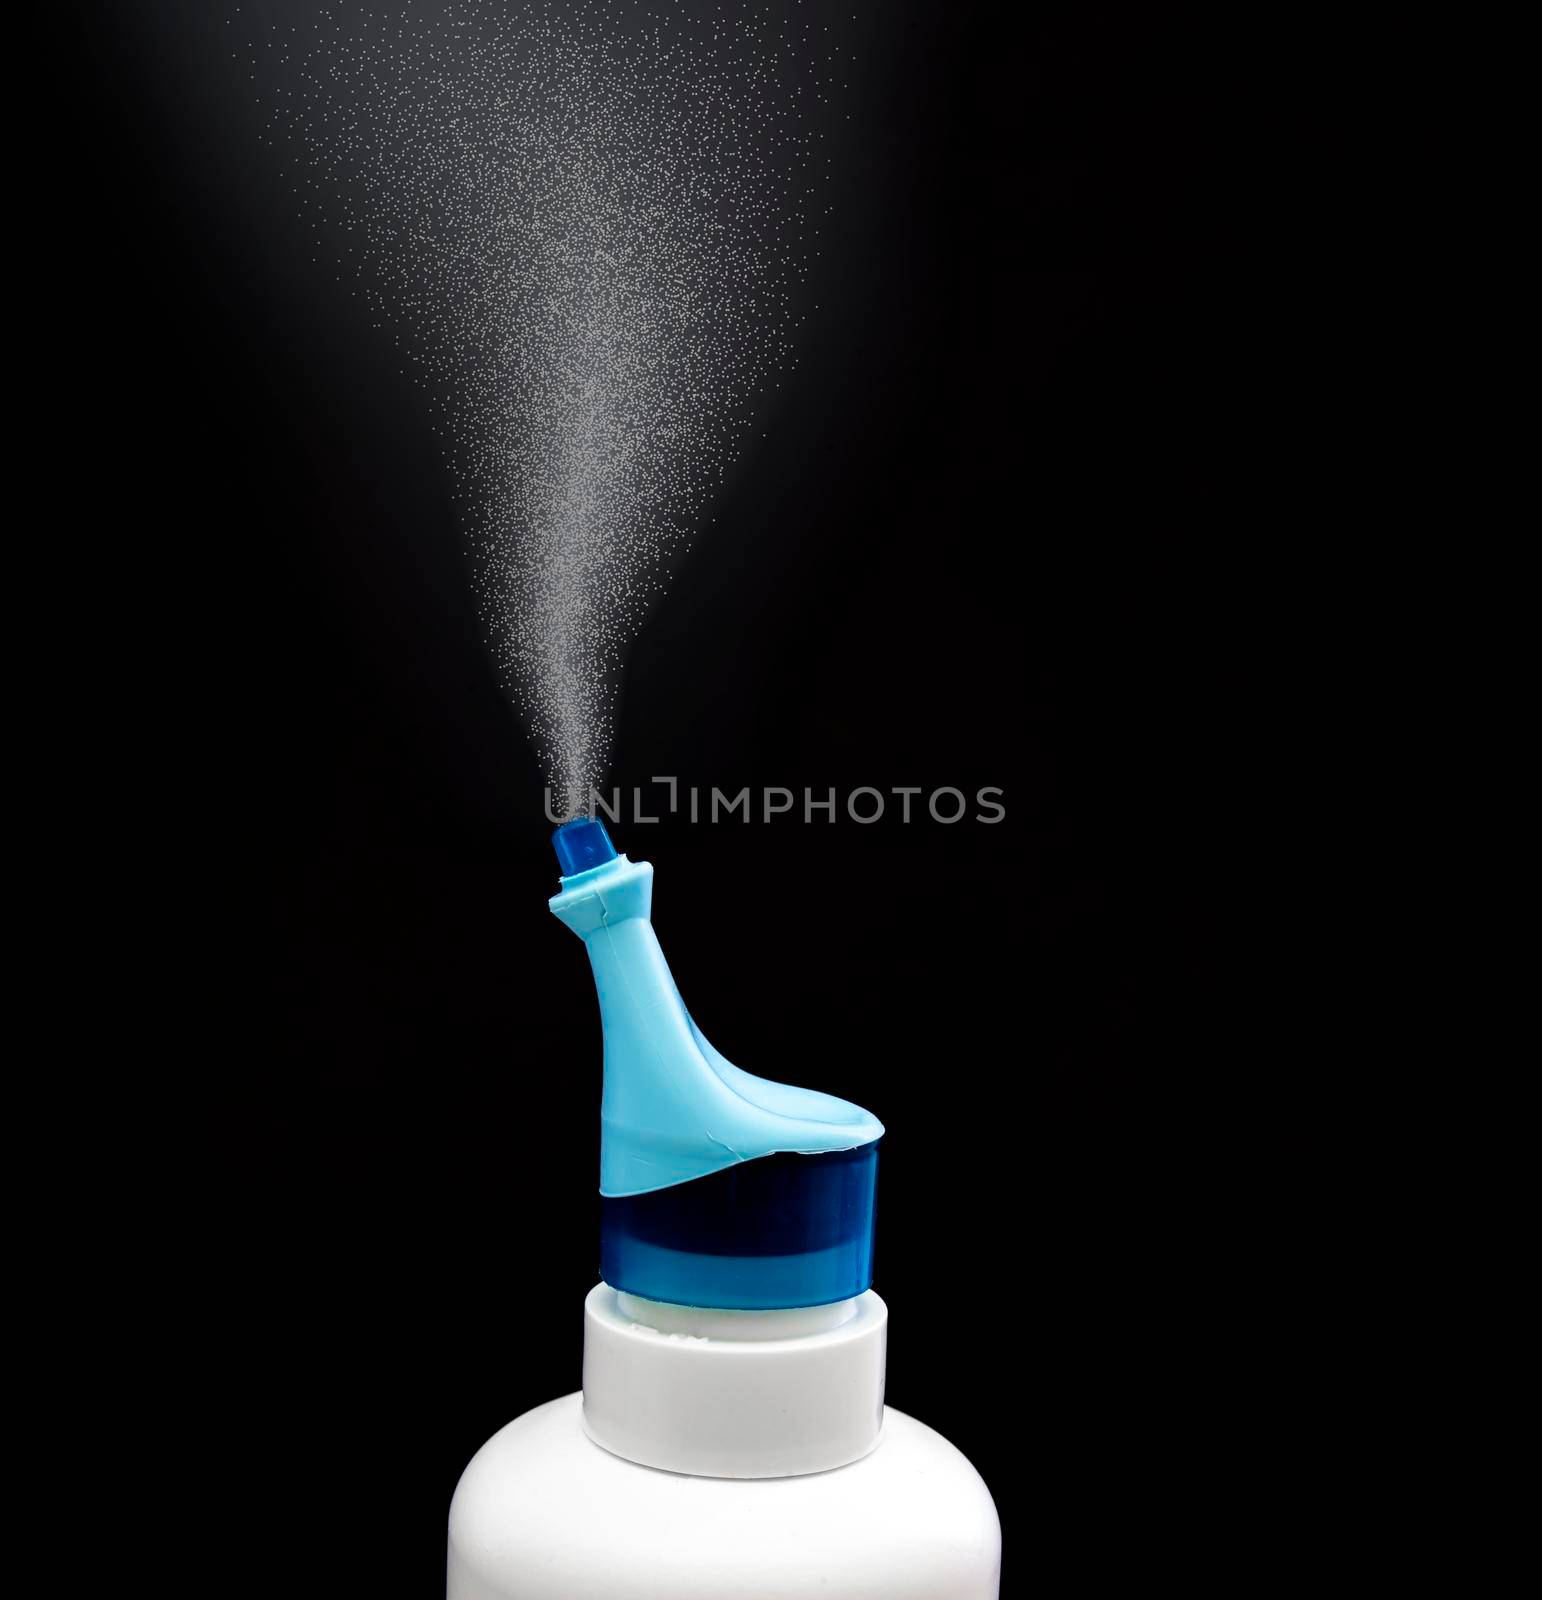 A children nasal spray on a black background by oasisamuel